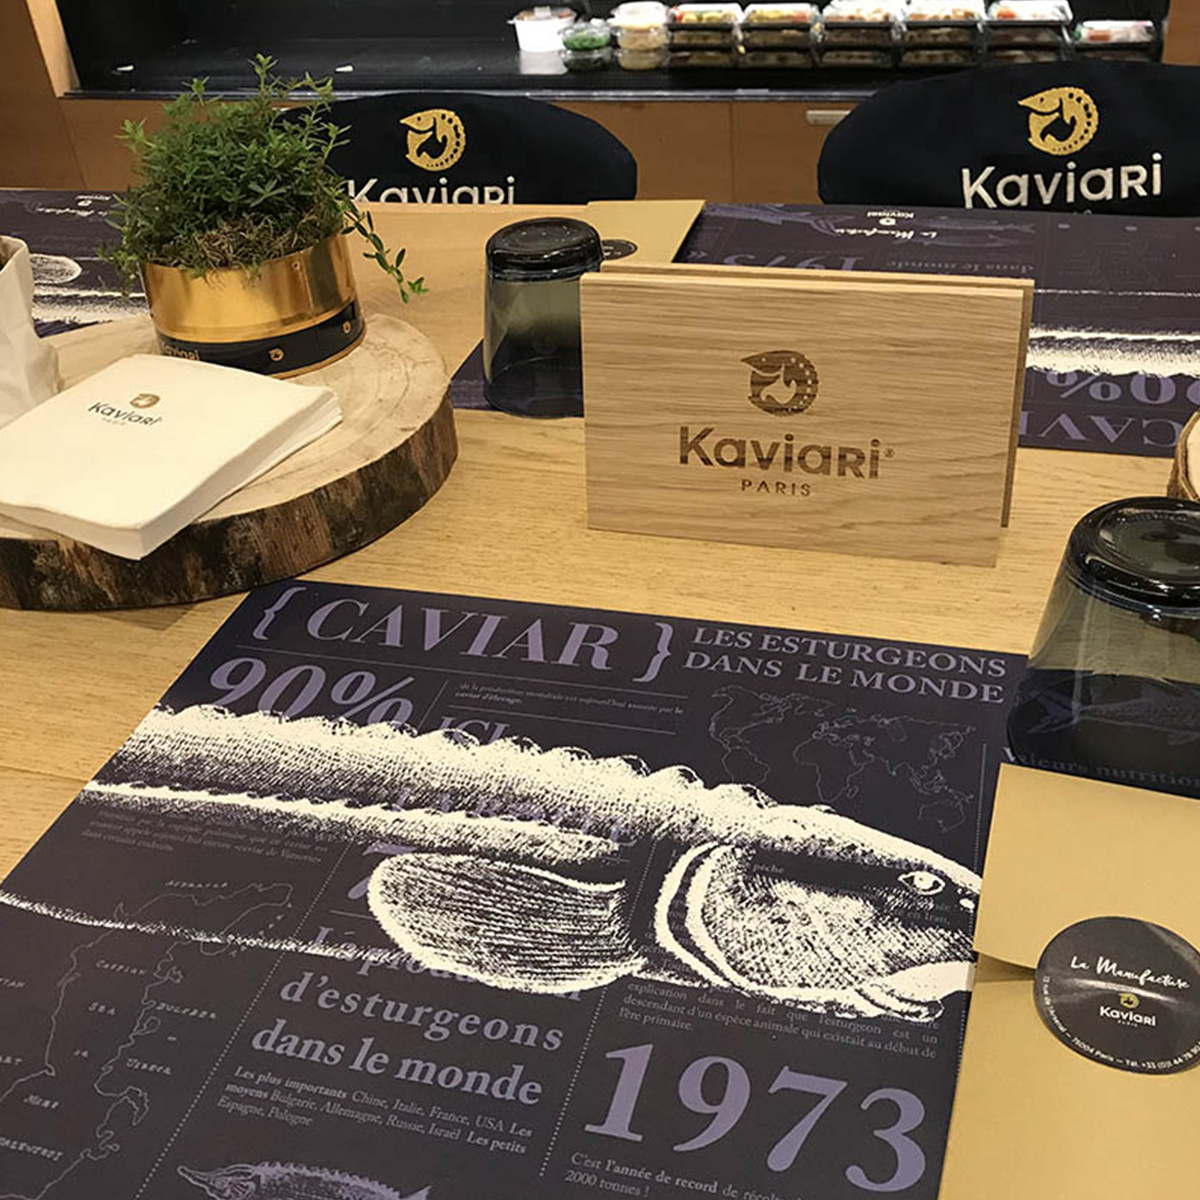 Kaviari - Rituel de service & experience consommateurs